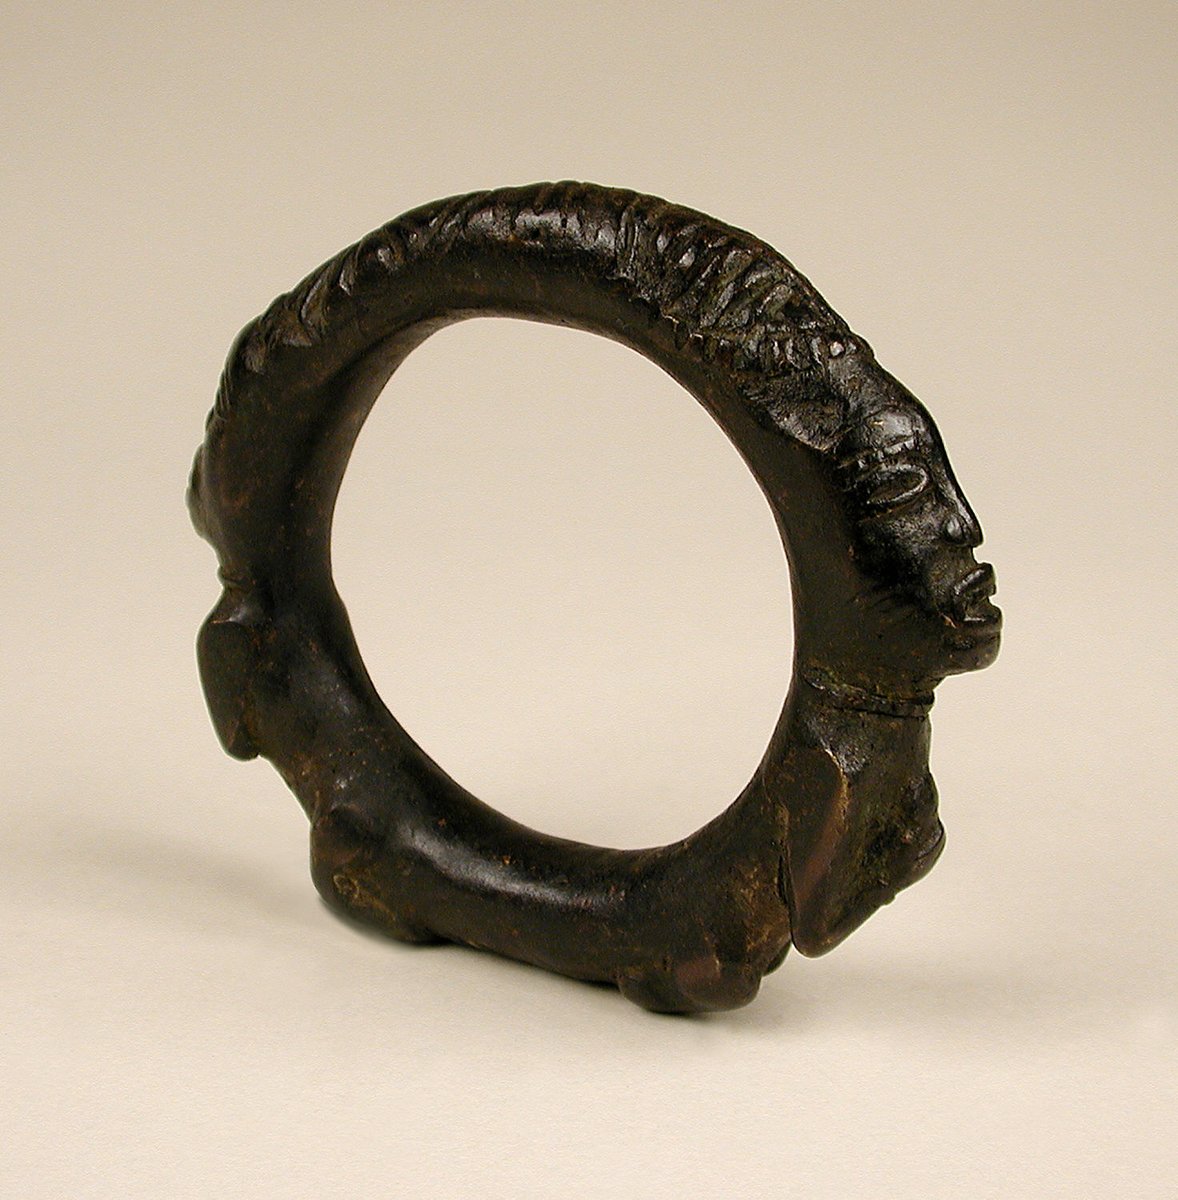 Title: Bracelet

Location: Congo

Date: 17th-18th century

si.edu/object/edanmdm… 

 #DemocraticRepublicoftheCongo #ArtBot